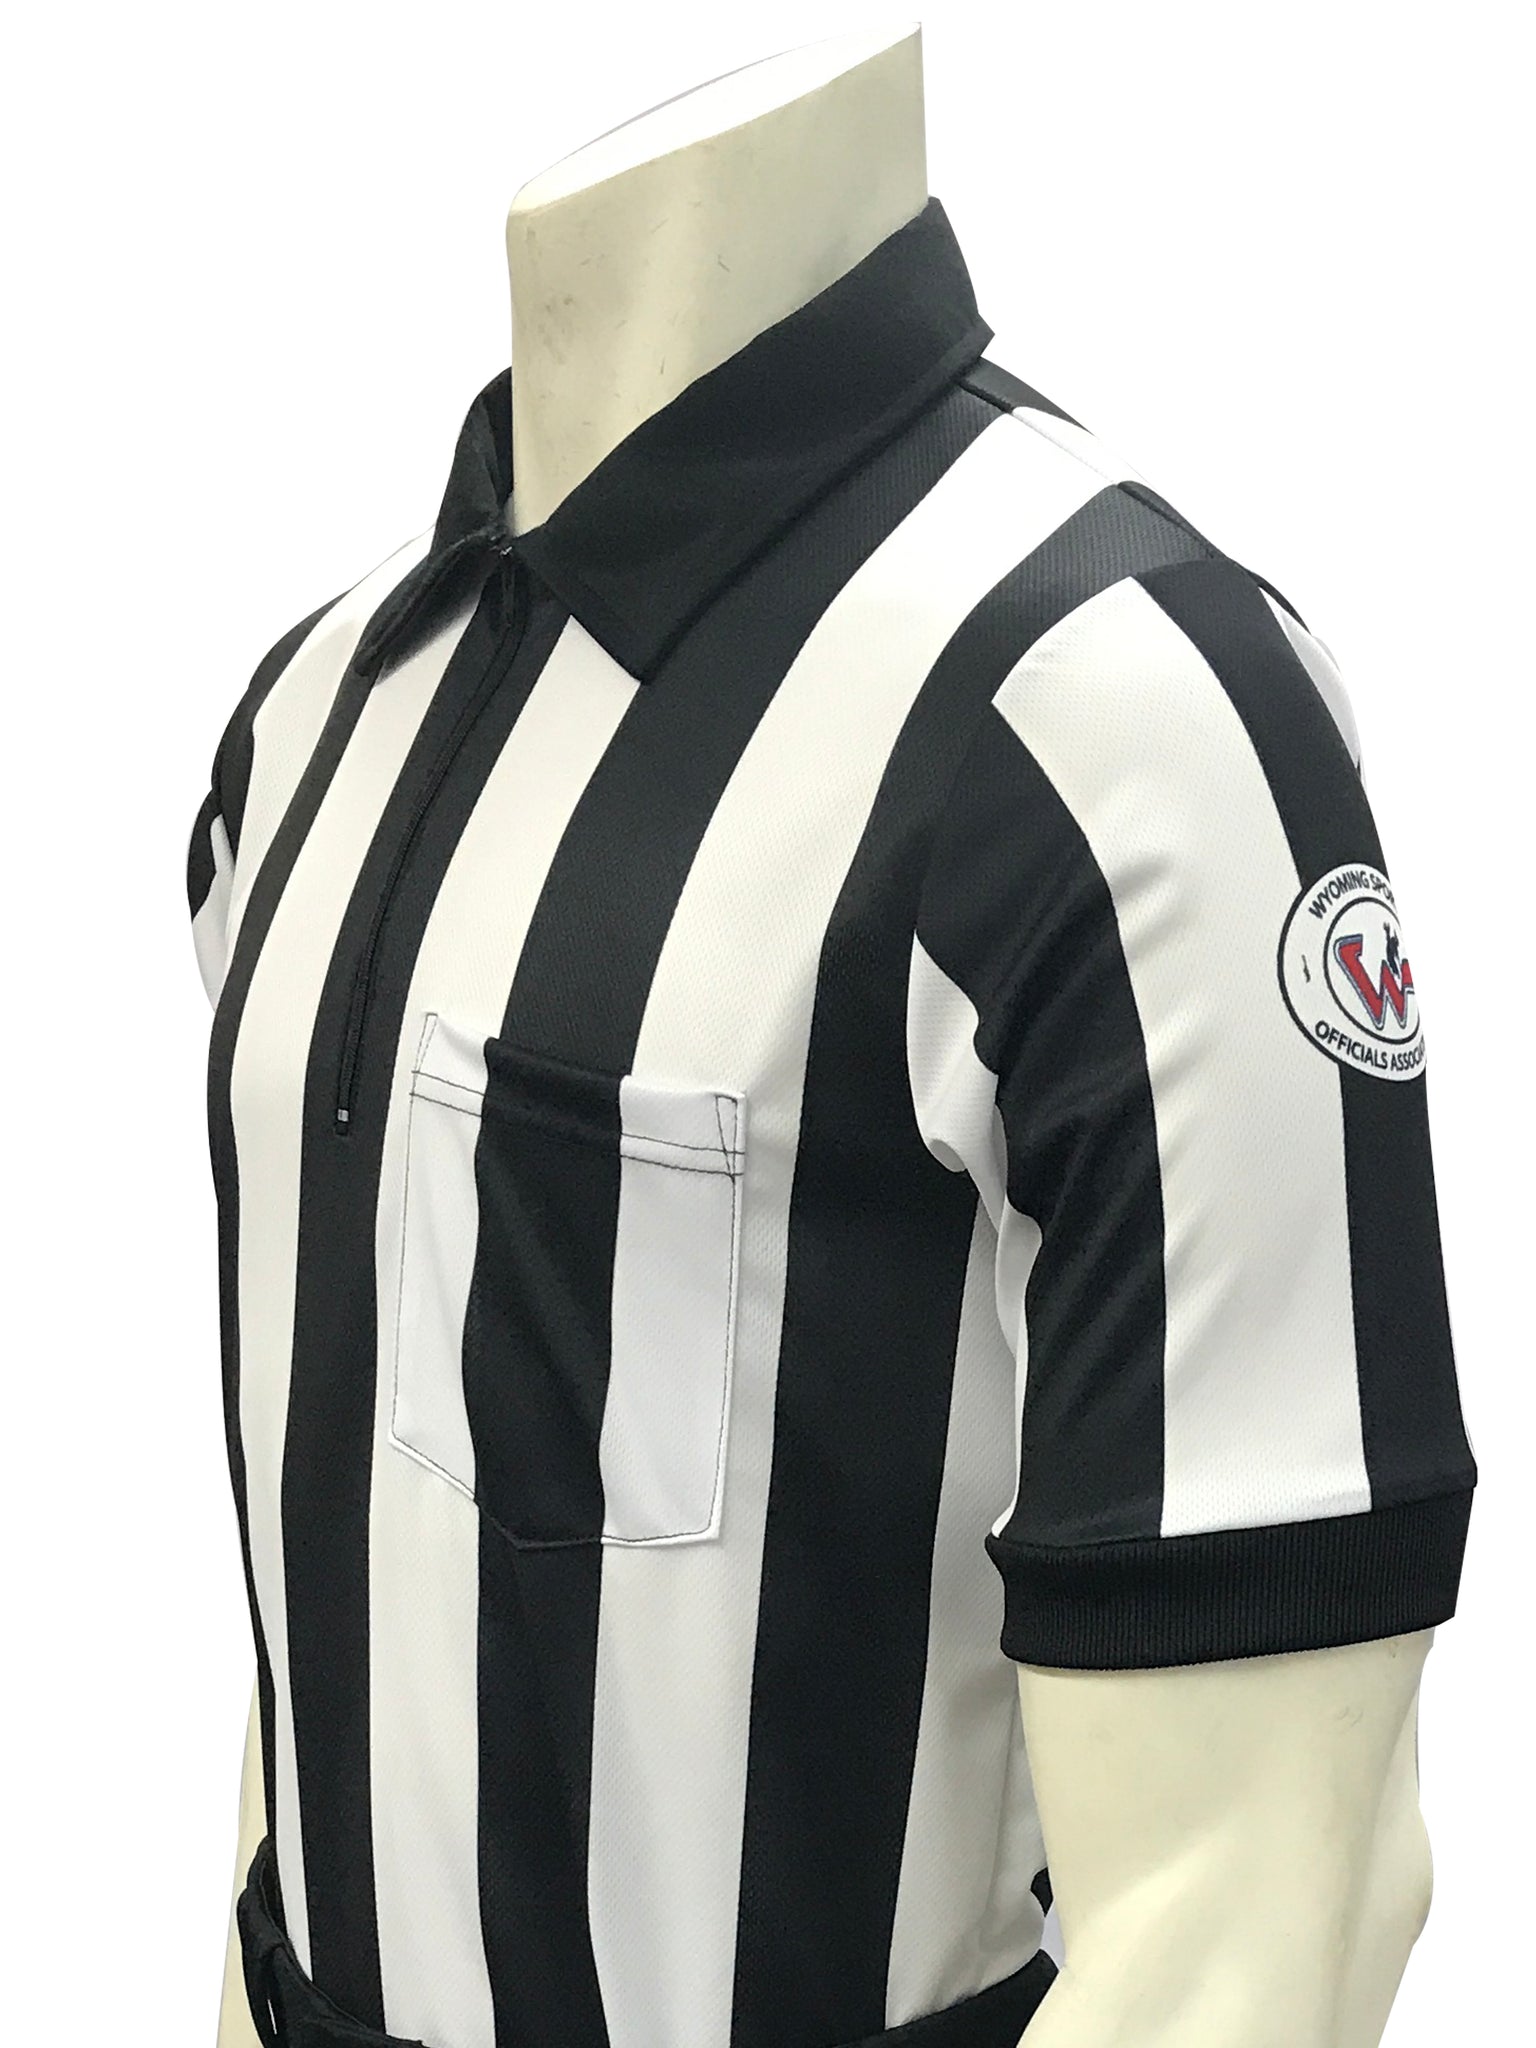 USA117WY-607 - Smitty "Made in USA" - "BODY FLEX" Football Men's Short Sleeve Shirt